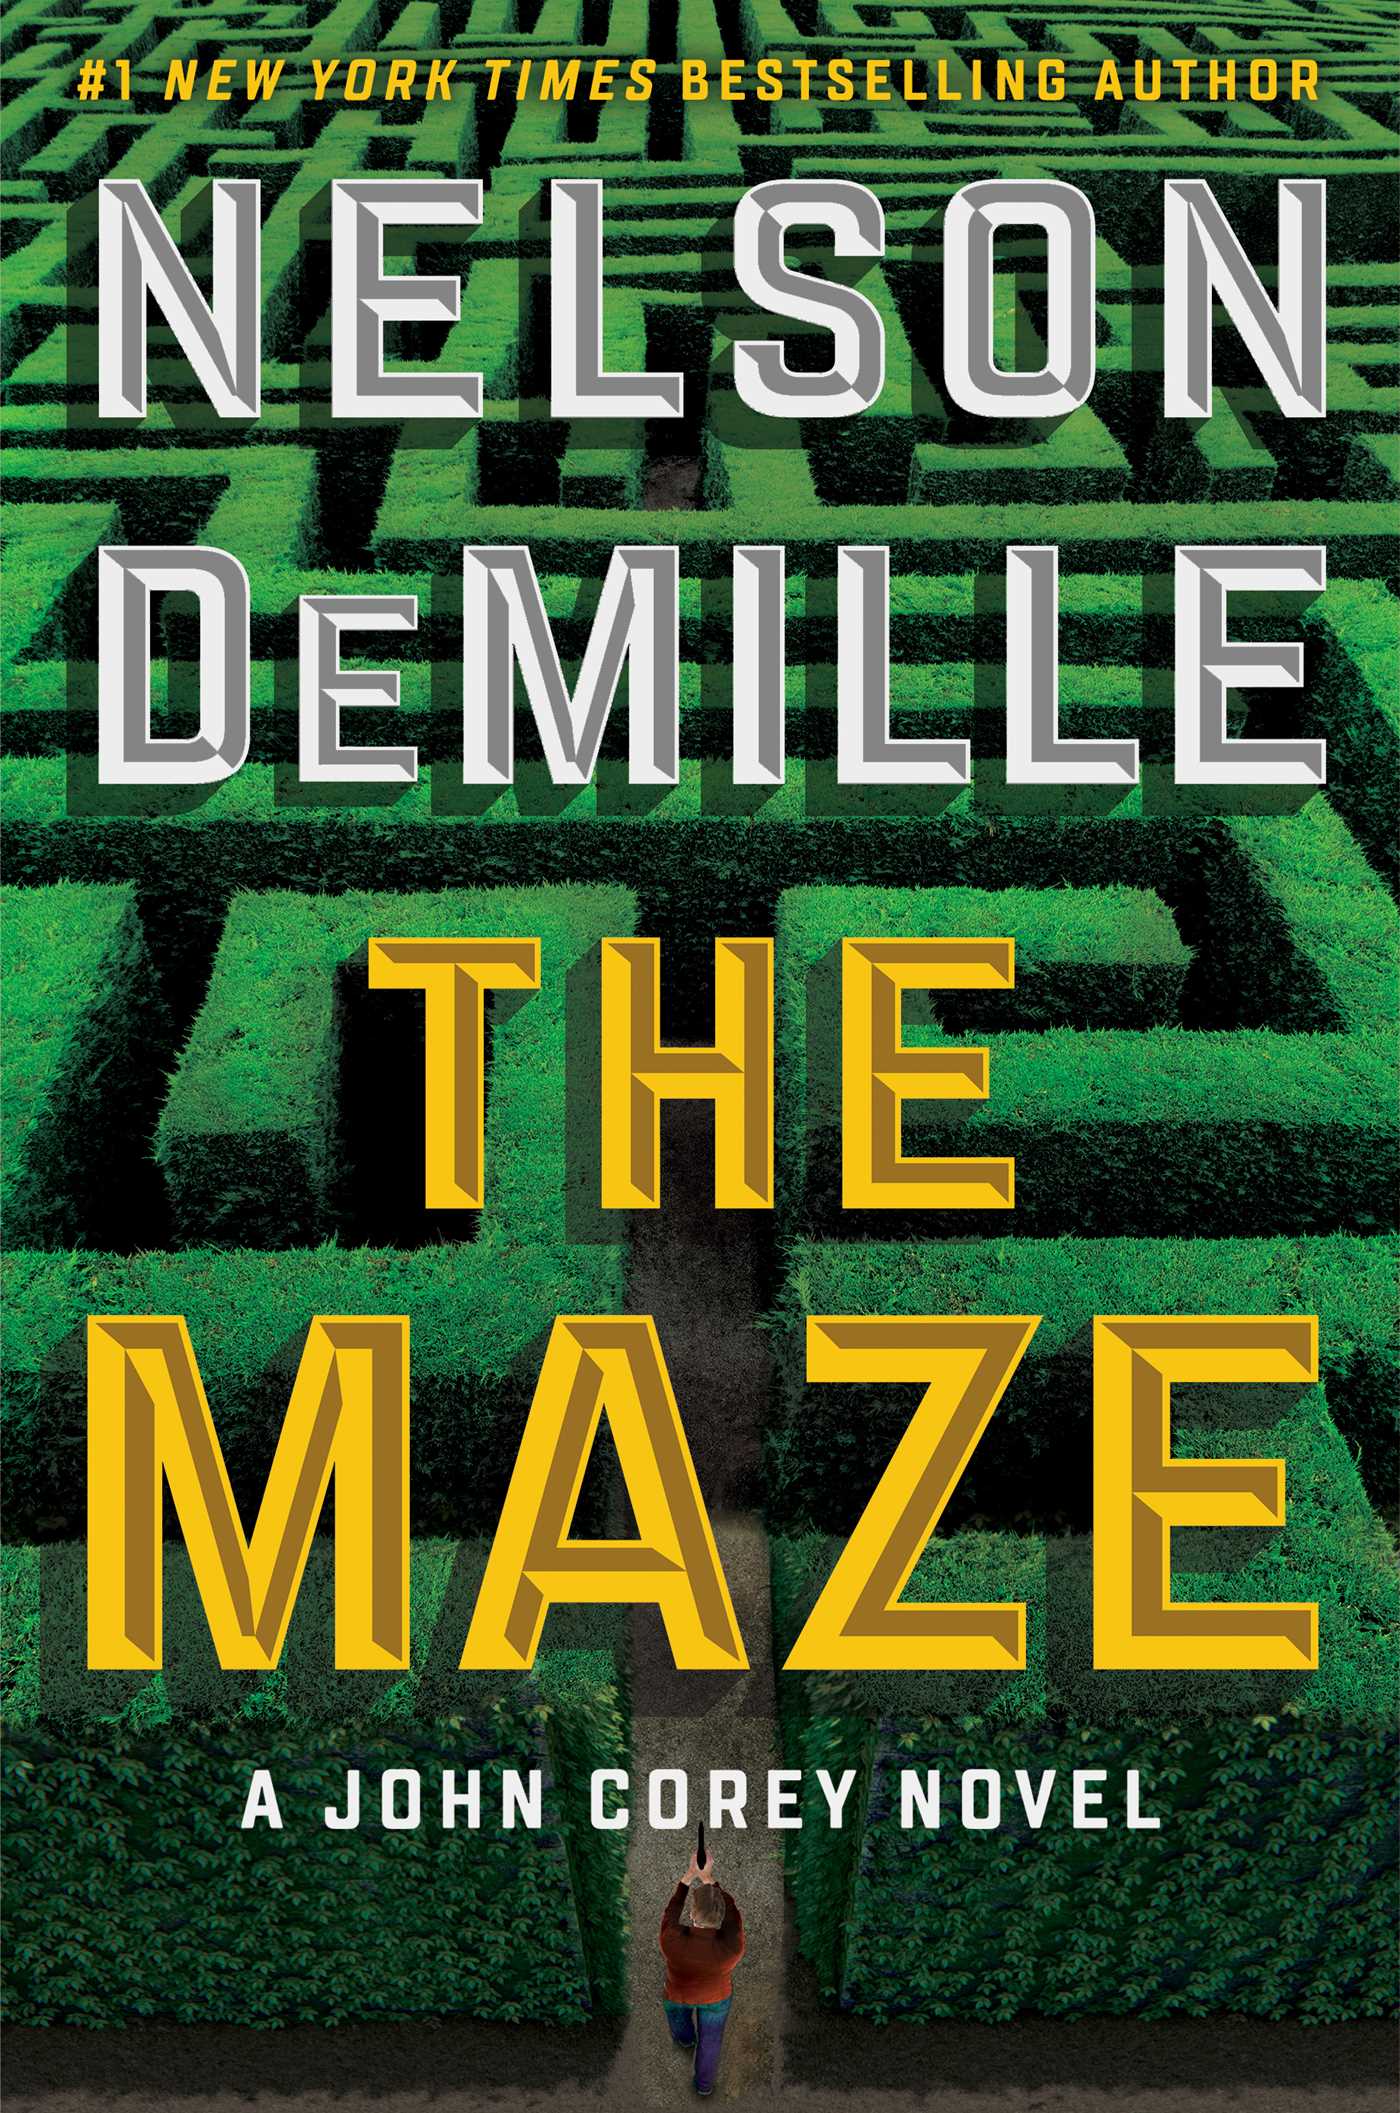 The Maze (John Corey, #8) books